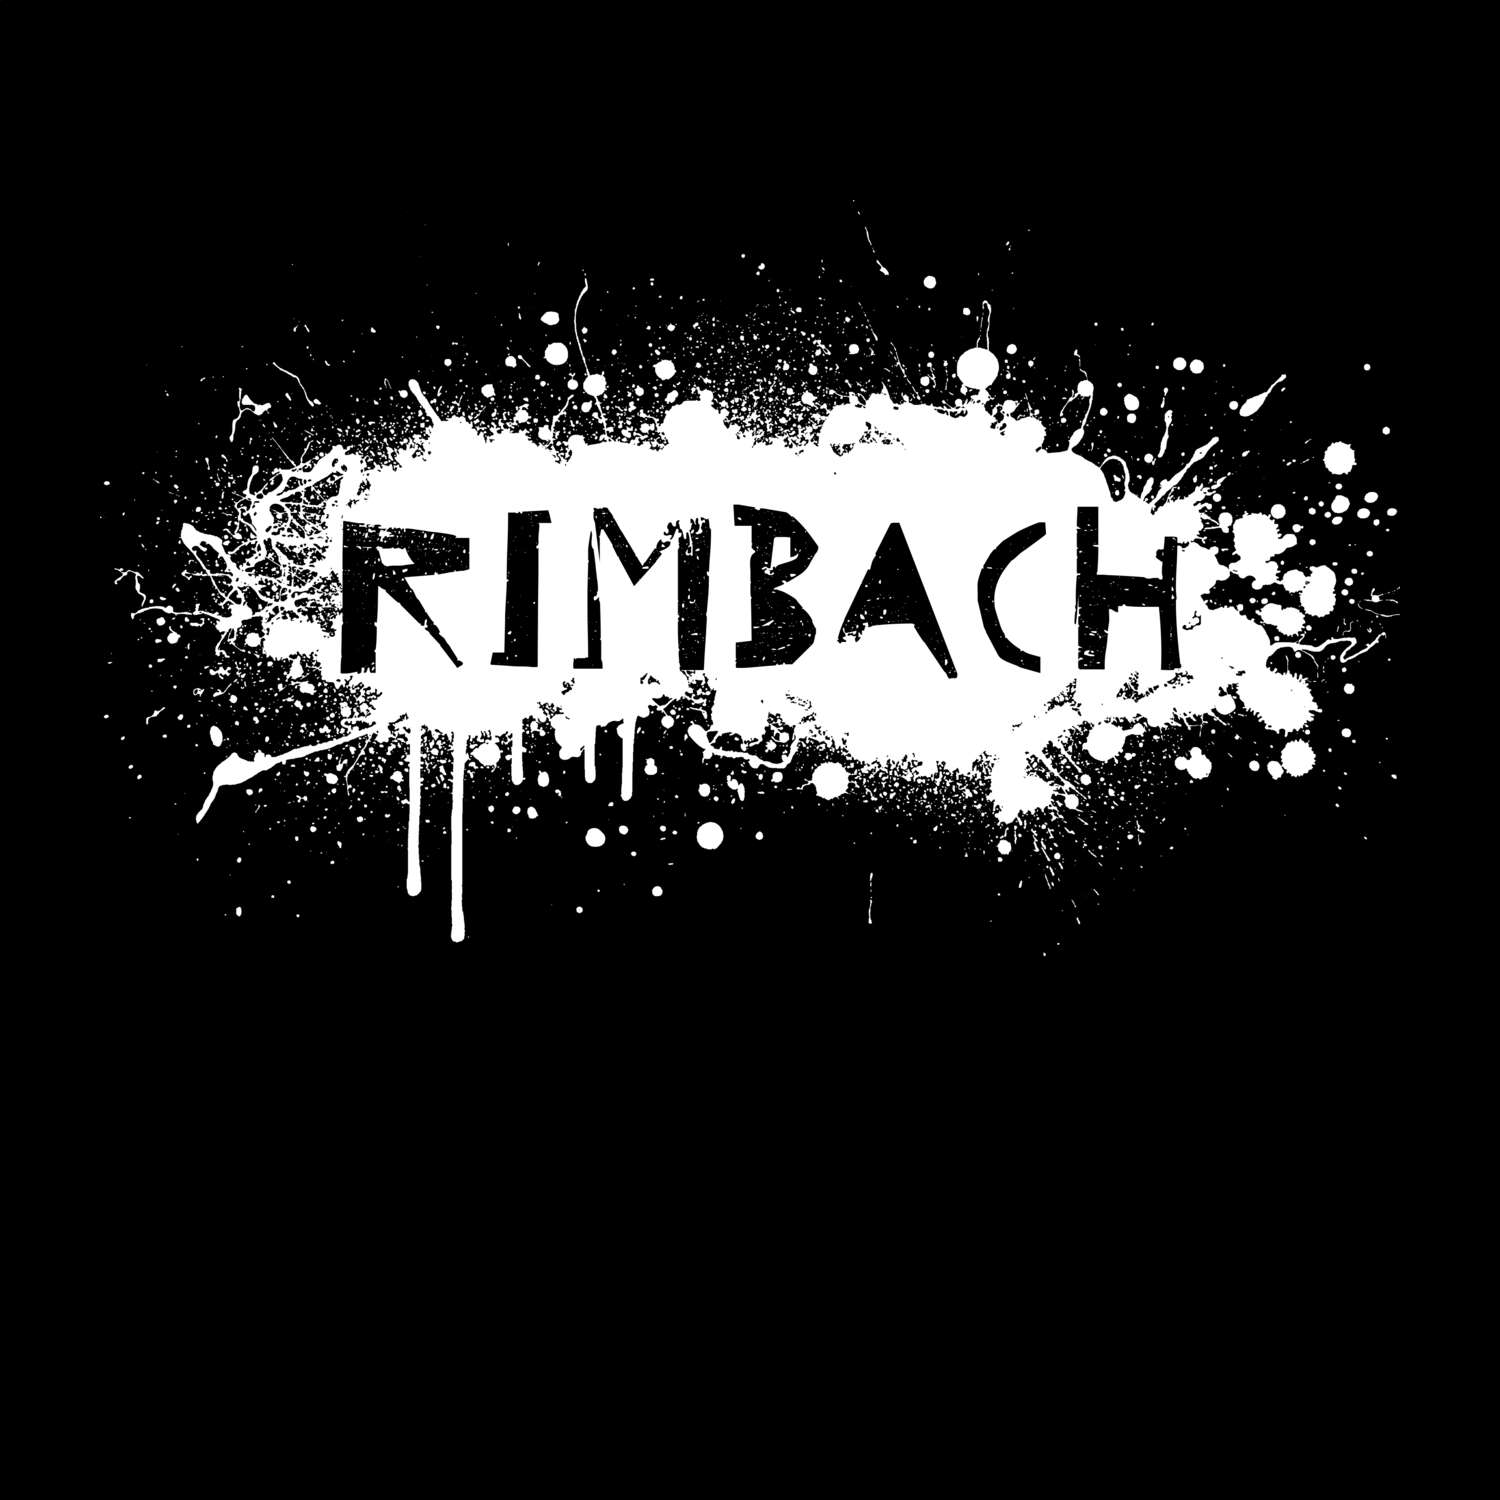 Rimbach T-Shirt »Paint Splash Punk«